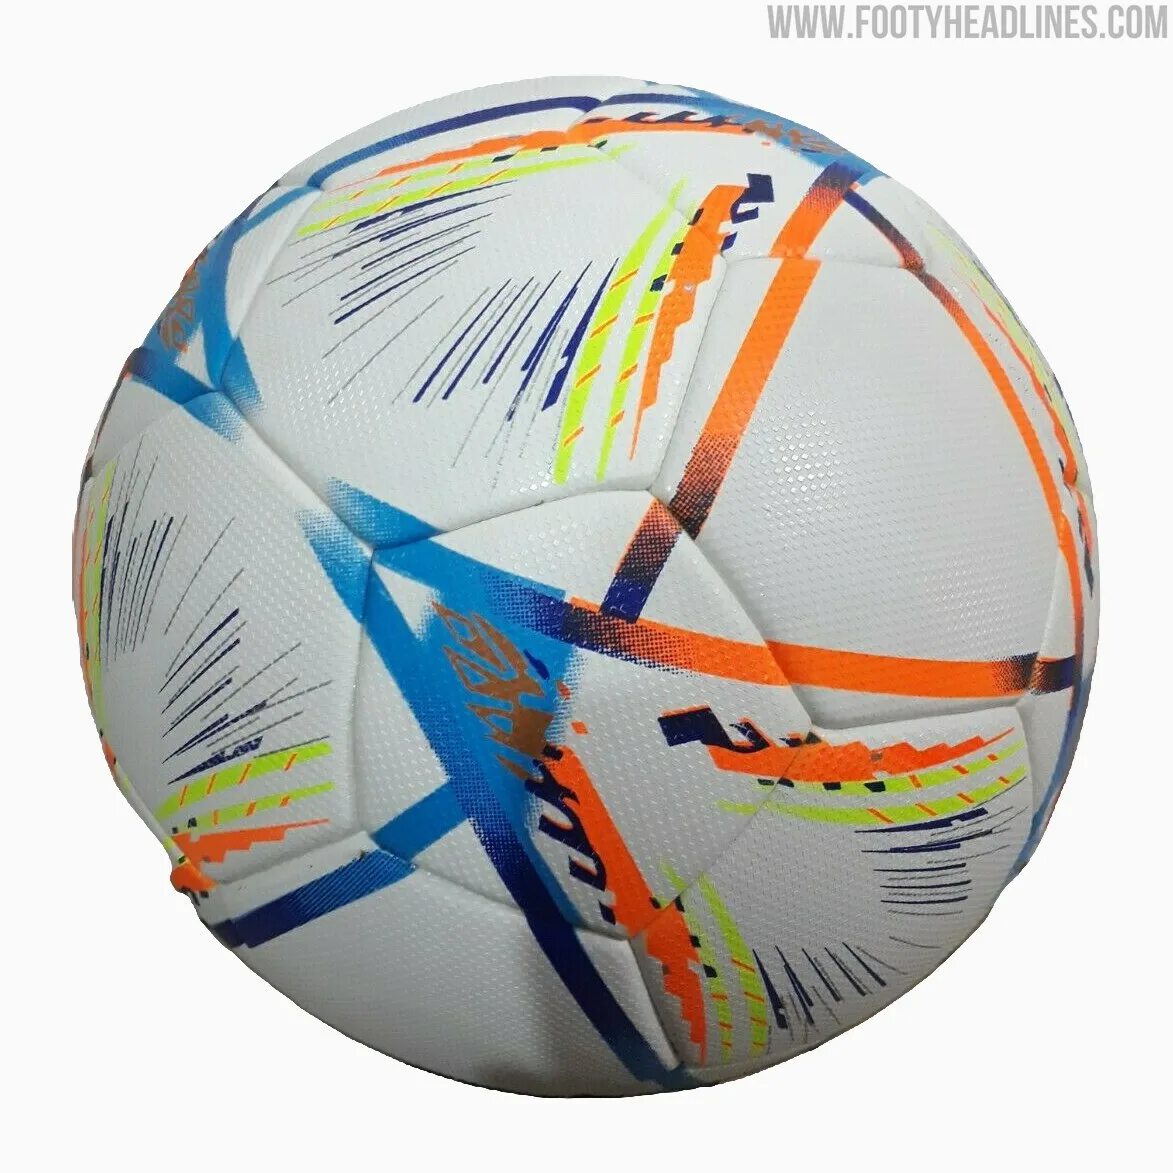 Ball 2022. Adidas World Cup 2022 Ball. Adidas Ball 2022. Adidas Qatar 2022 Ball. Adidas FIFA 2022 Ball.